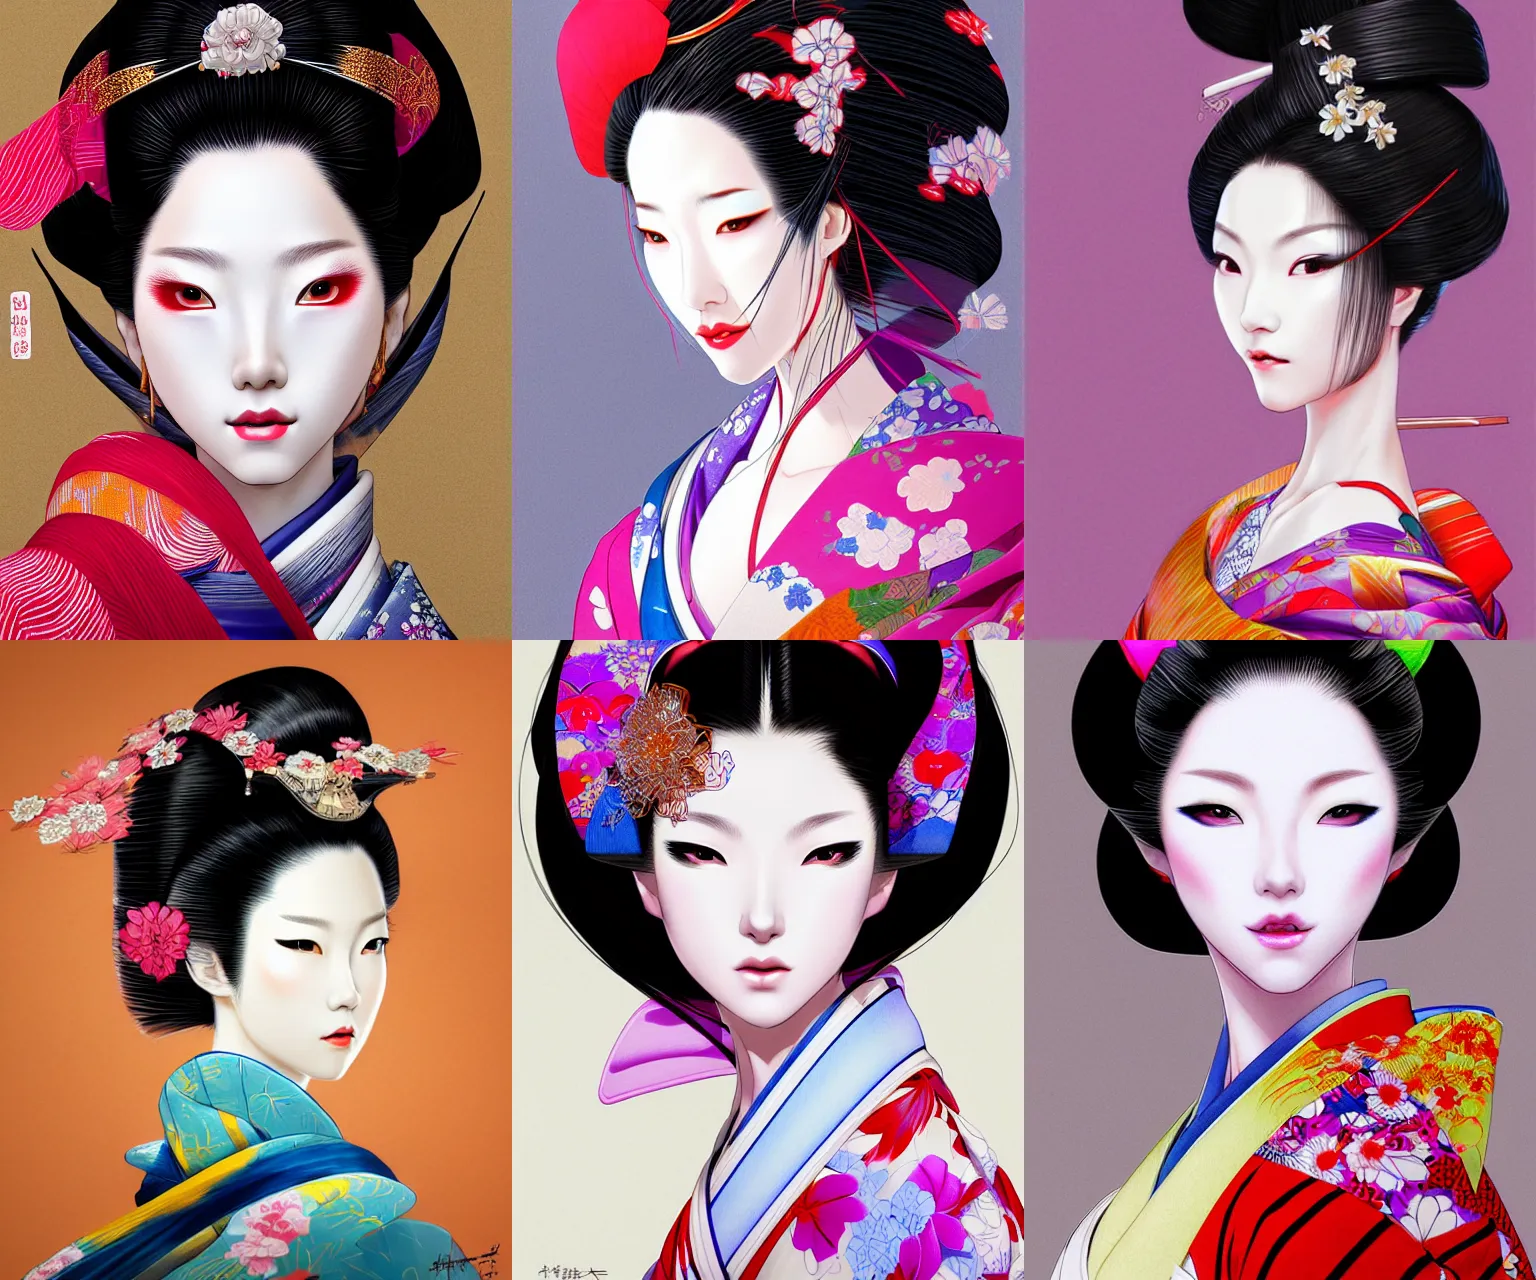 Prompt: portrait of a geisha, fashion, beautiful, elegant colorful, artstation trending, deviantart, highly detailed, focus, smooth, by hirohiko araki, yoshitaka amano